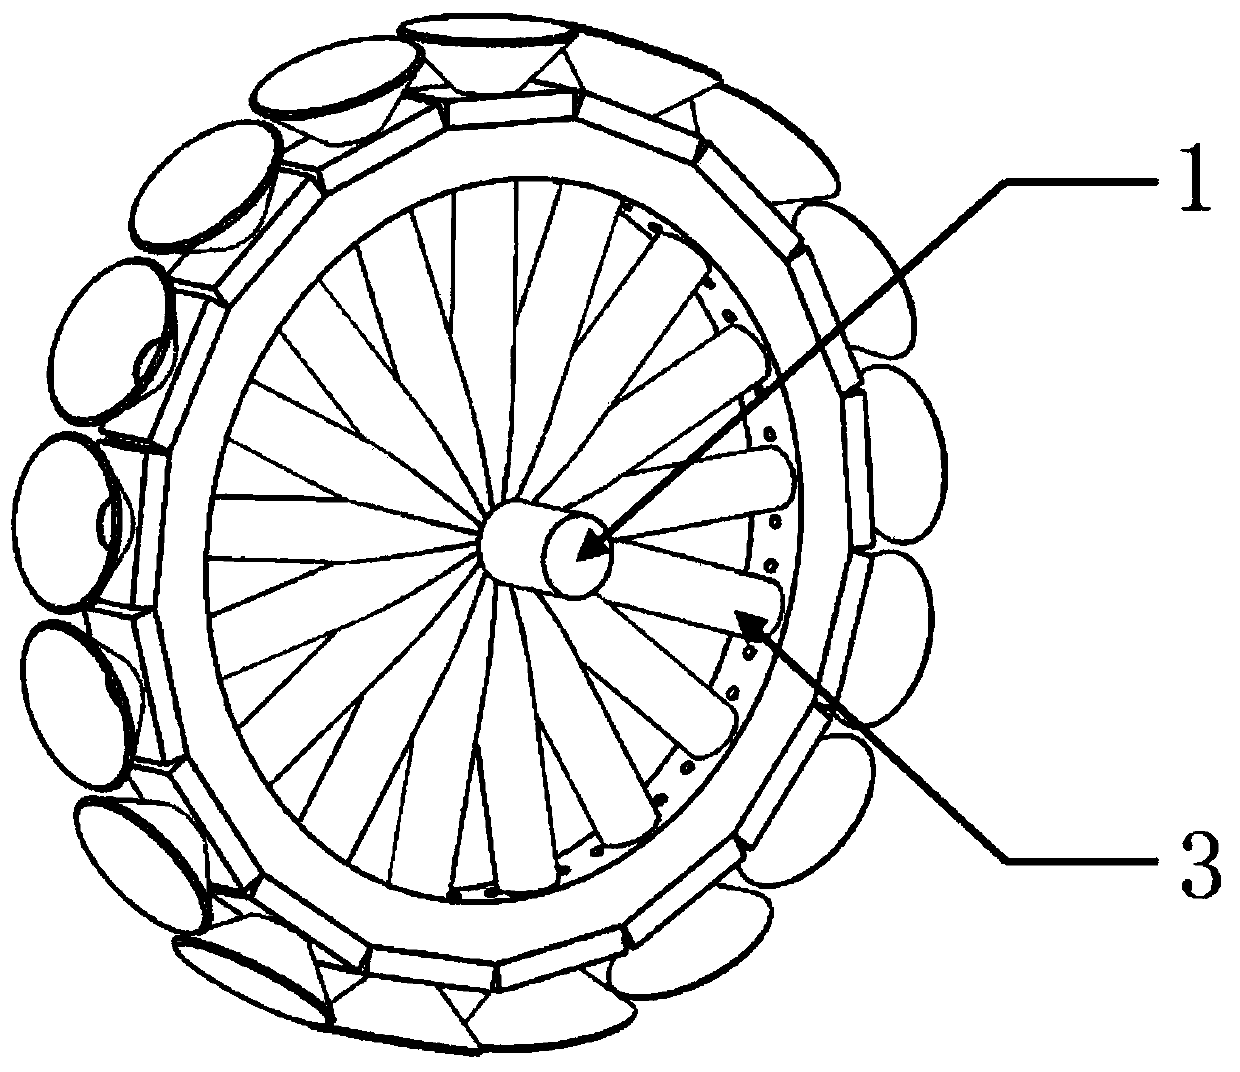 Adsorption-type climbing wheel and work method thereof